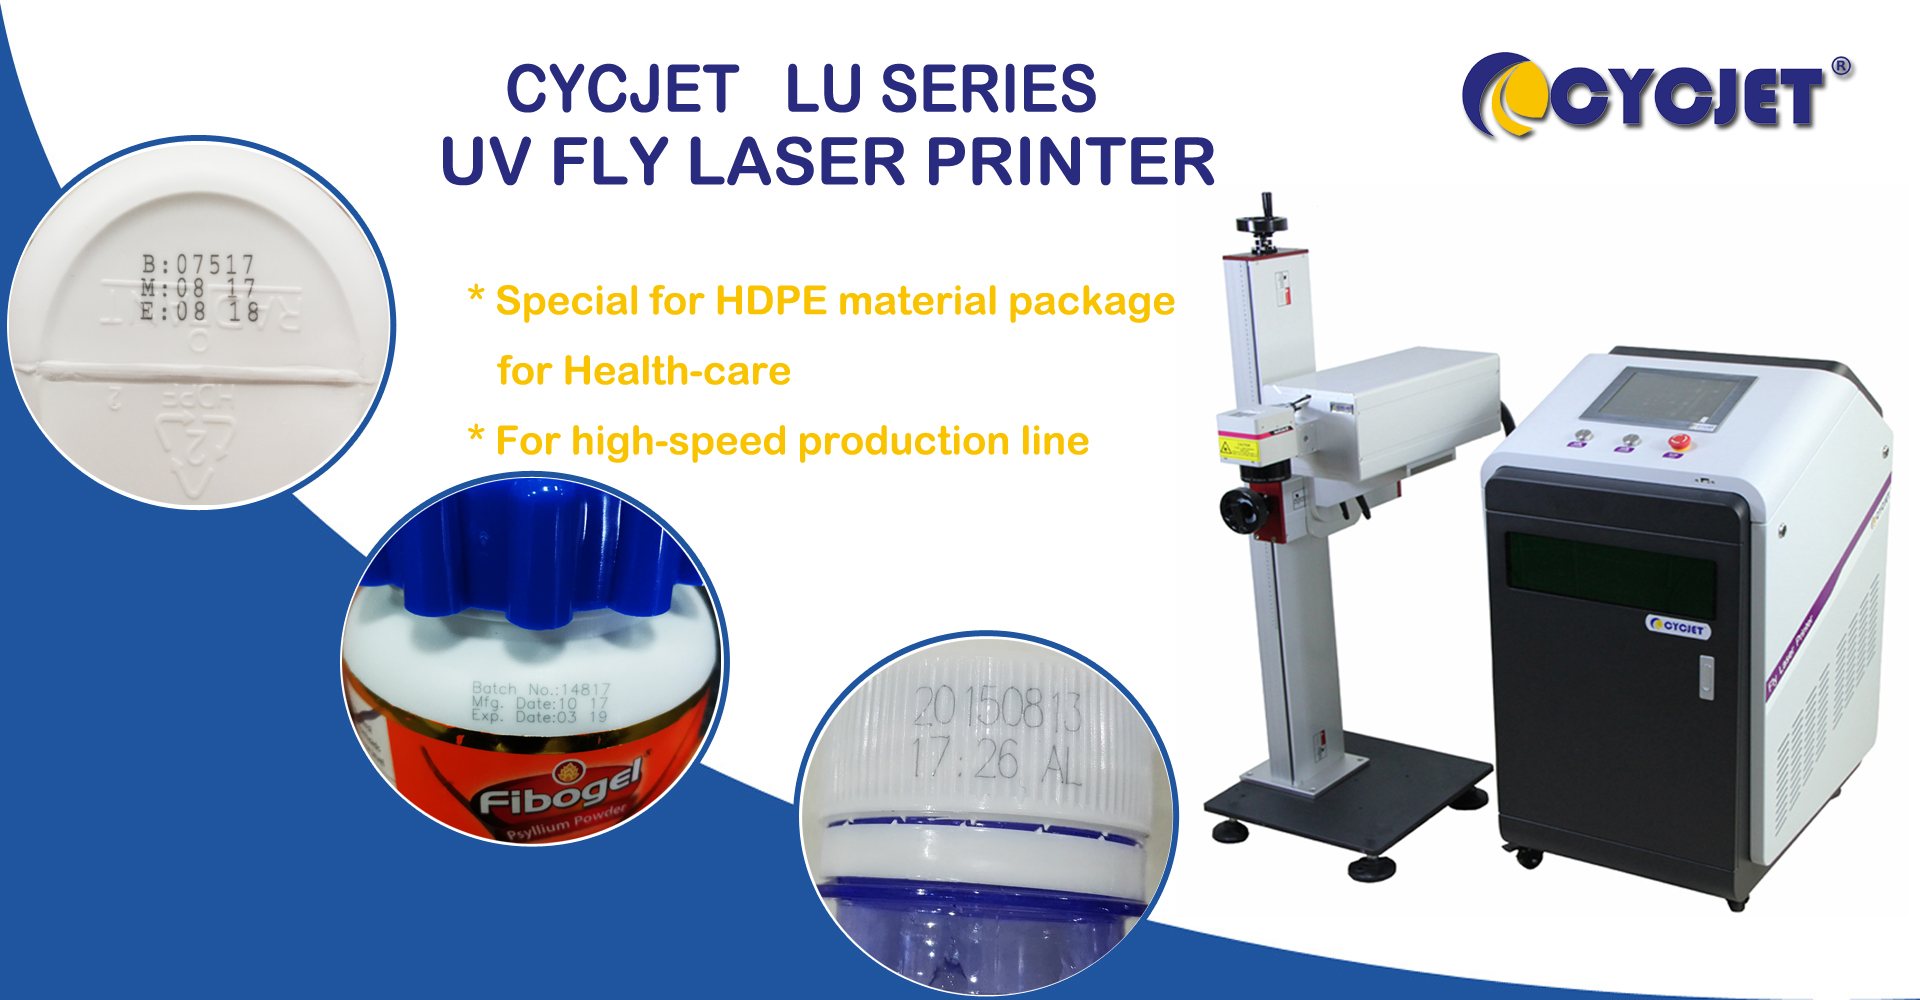 fly laser printer.jpg